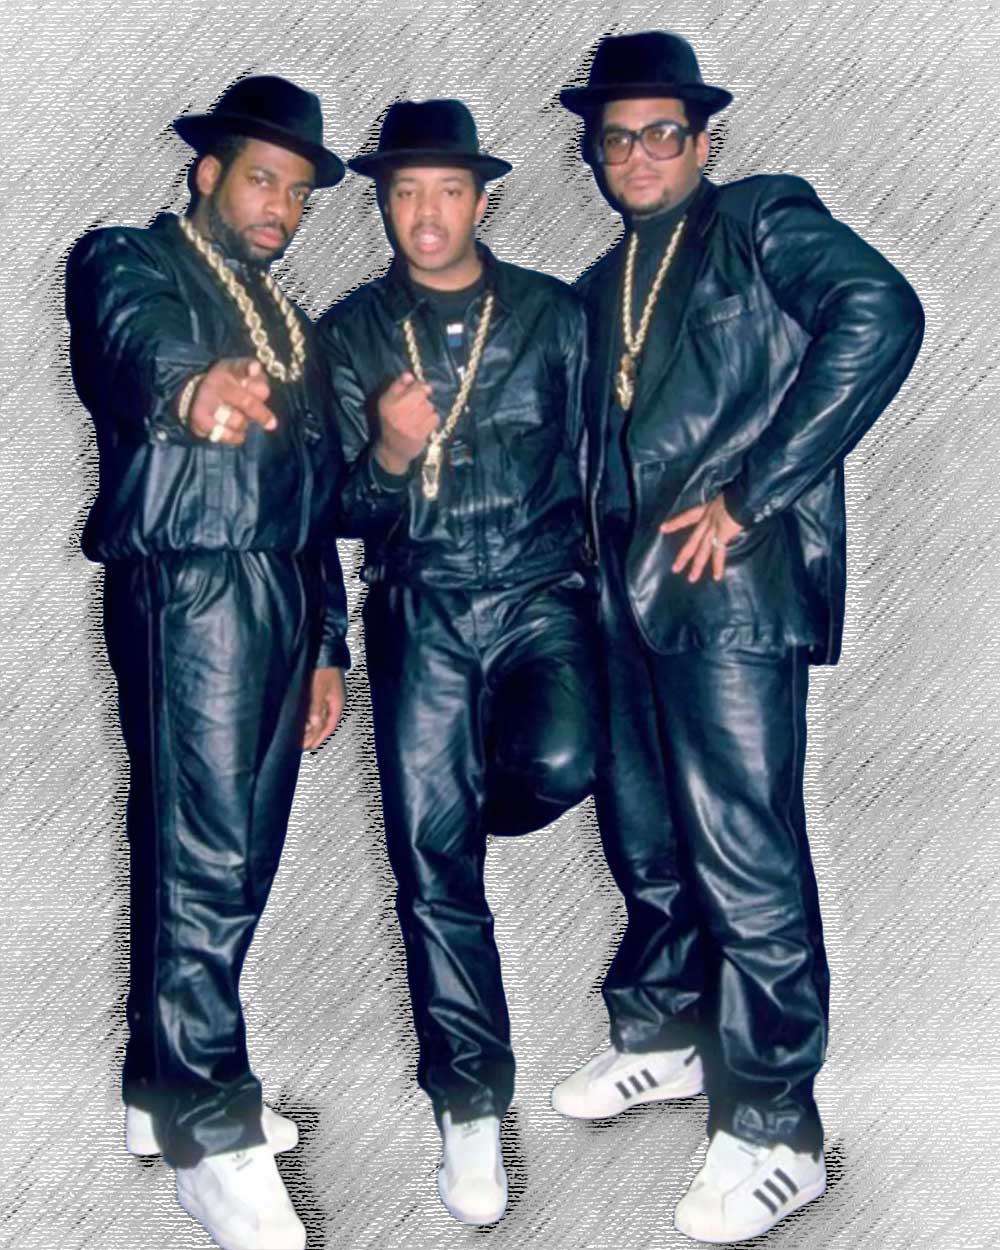 RUN D.M.C. "Rock Box" iconic black outfit